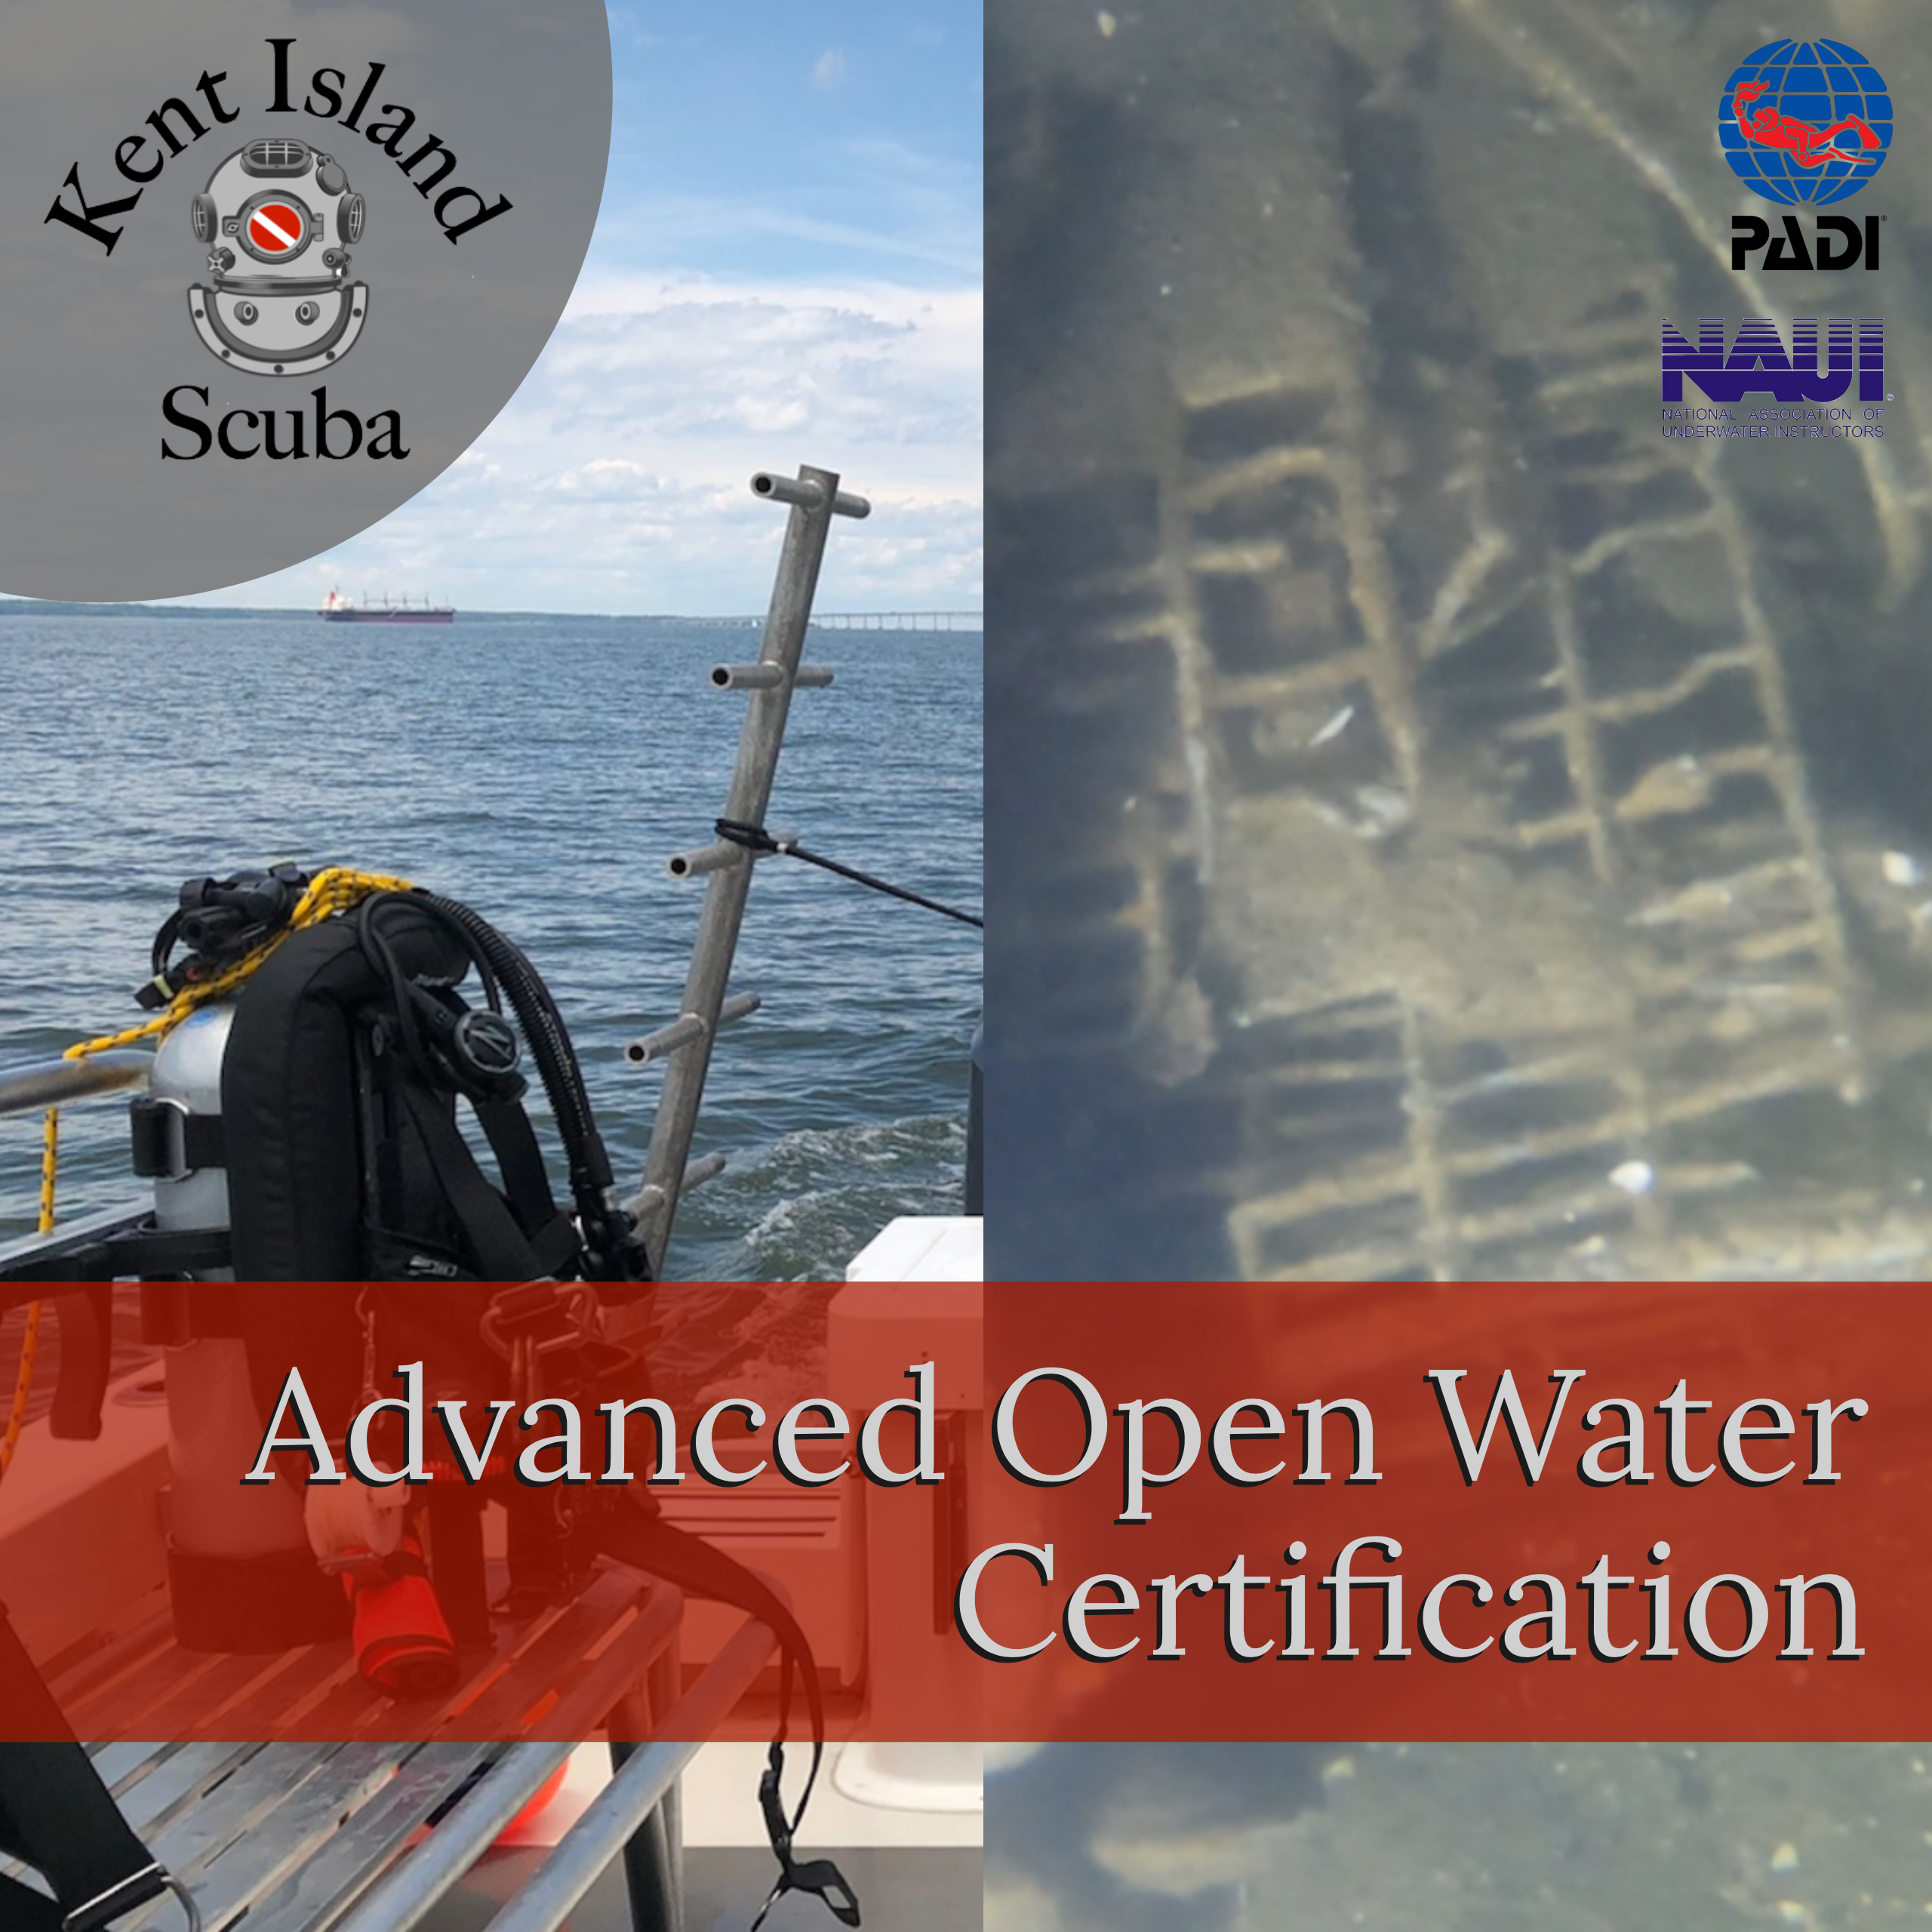 Kent Island Scuba Advanced Open Water